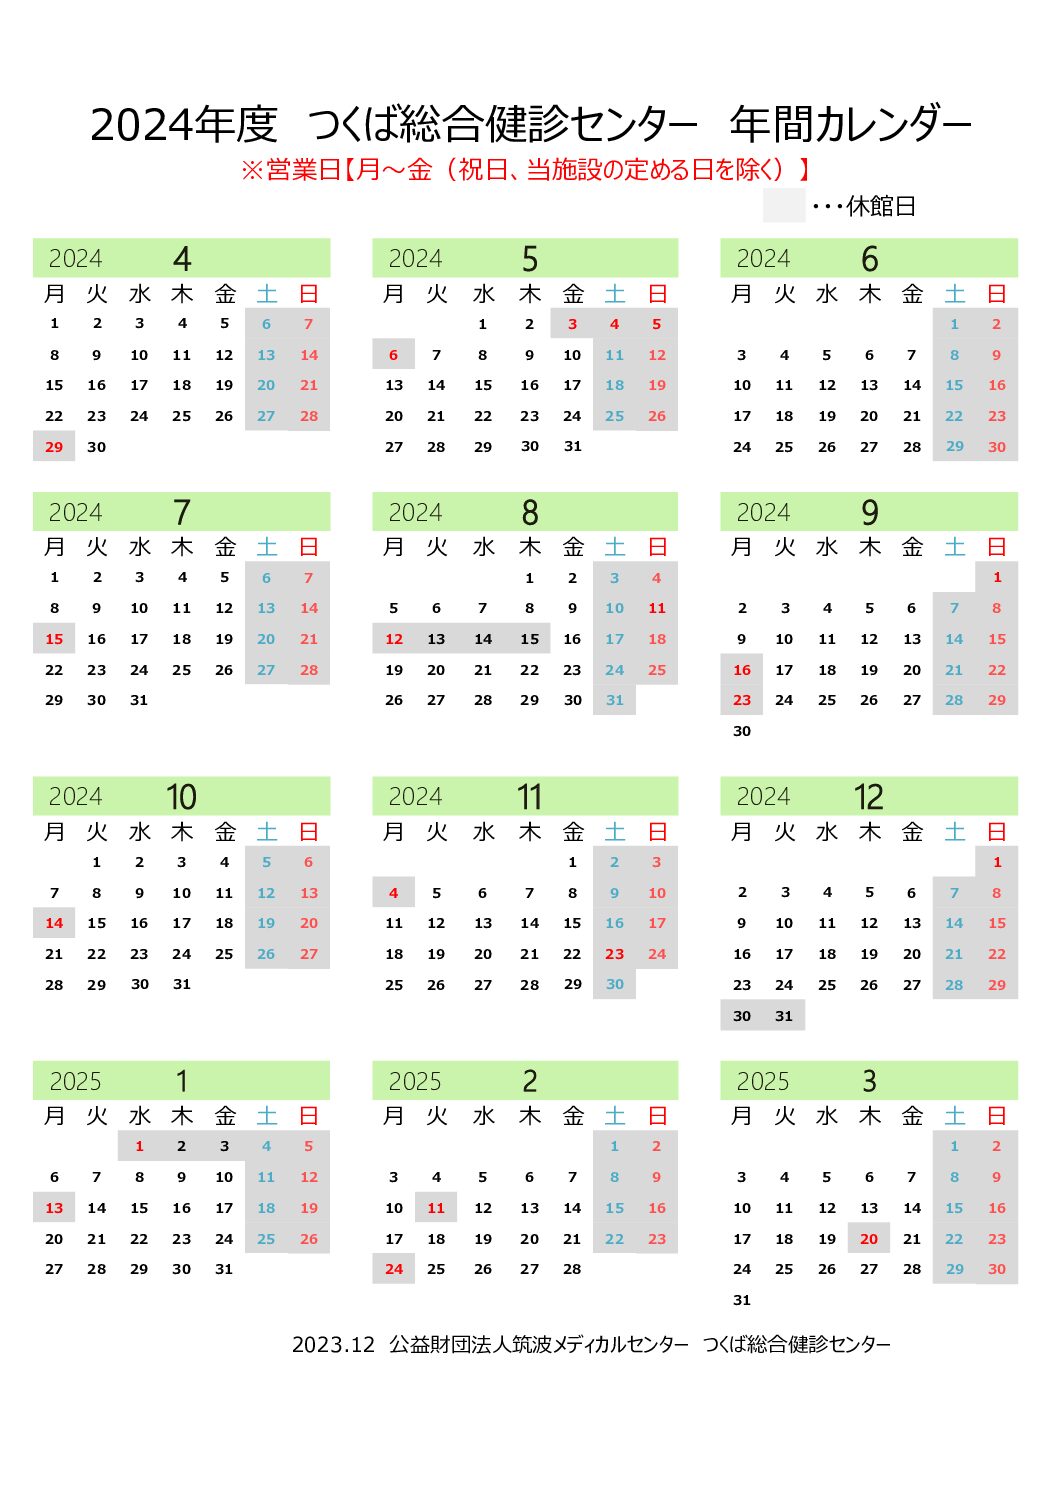 Image of the 2024 Health Checkup Center Annual Calendar